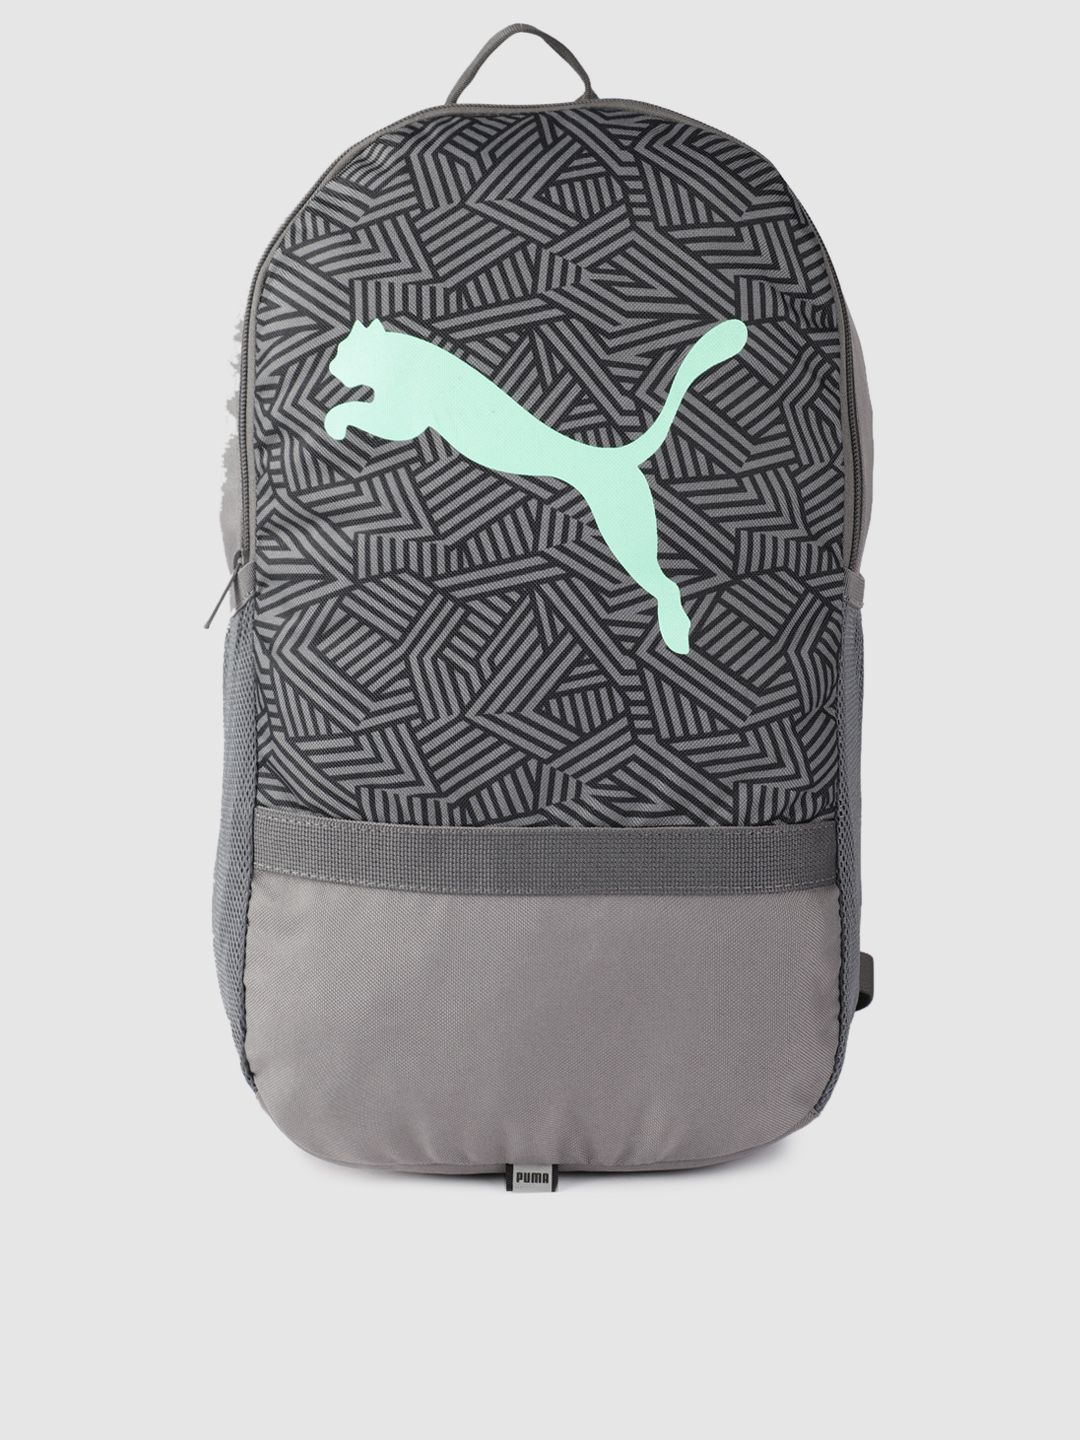 Puma Unisex Grey Graphic Beta Backpack Price in India